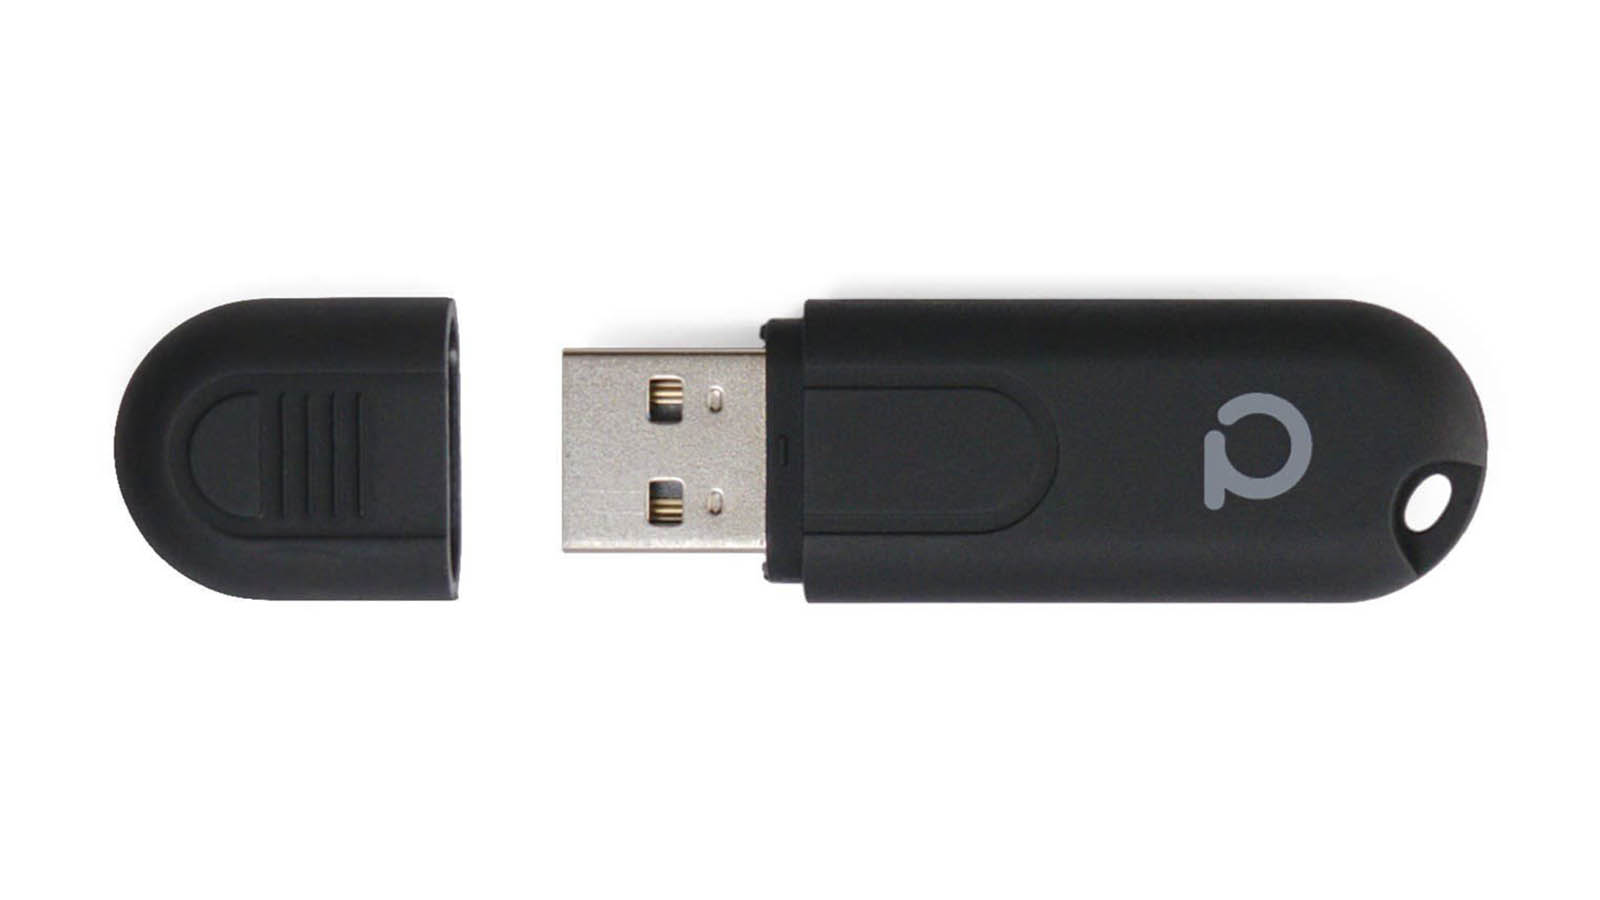 Best USB Zigbee Dongle for Home Assistant - Conbee II